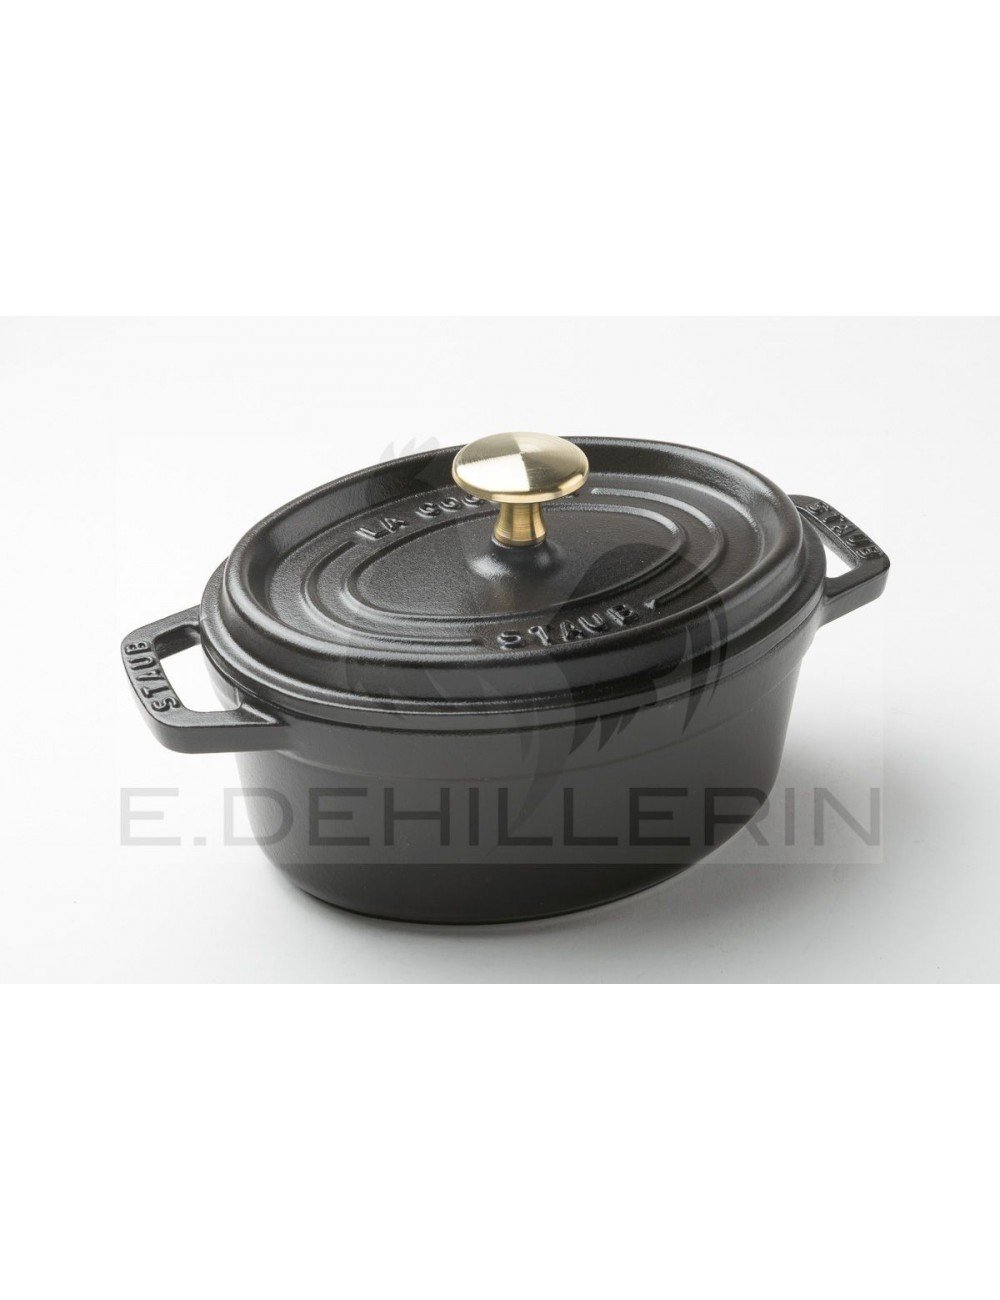 Staub cast iron pan, wooden handle, 20 cm, black 